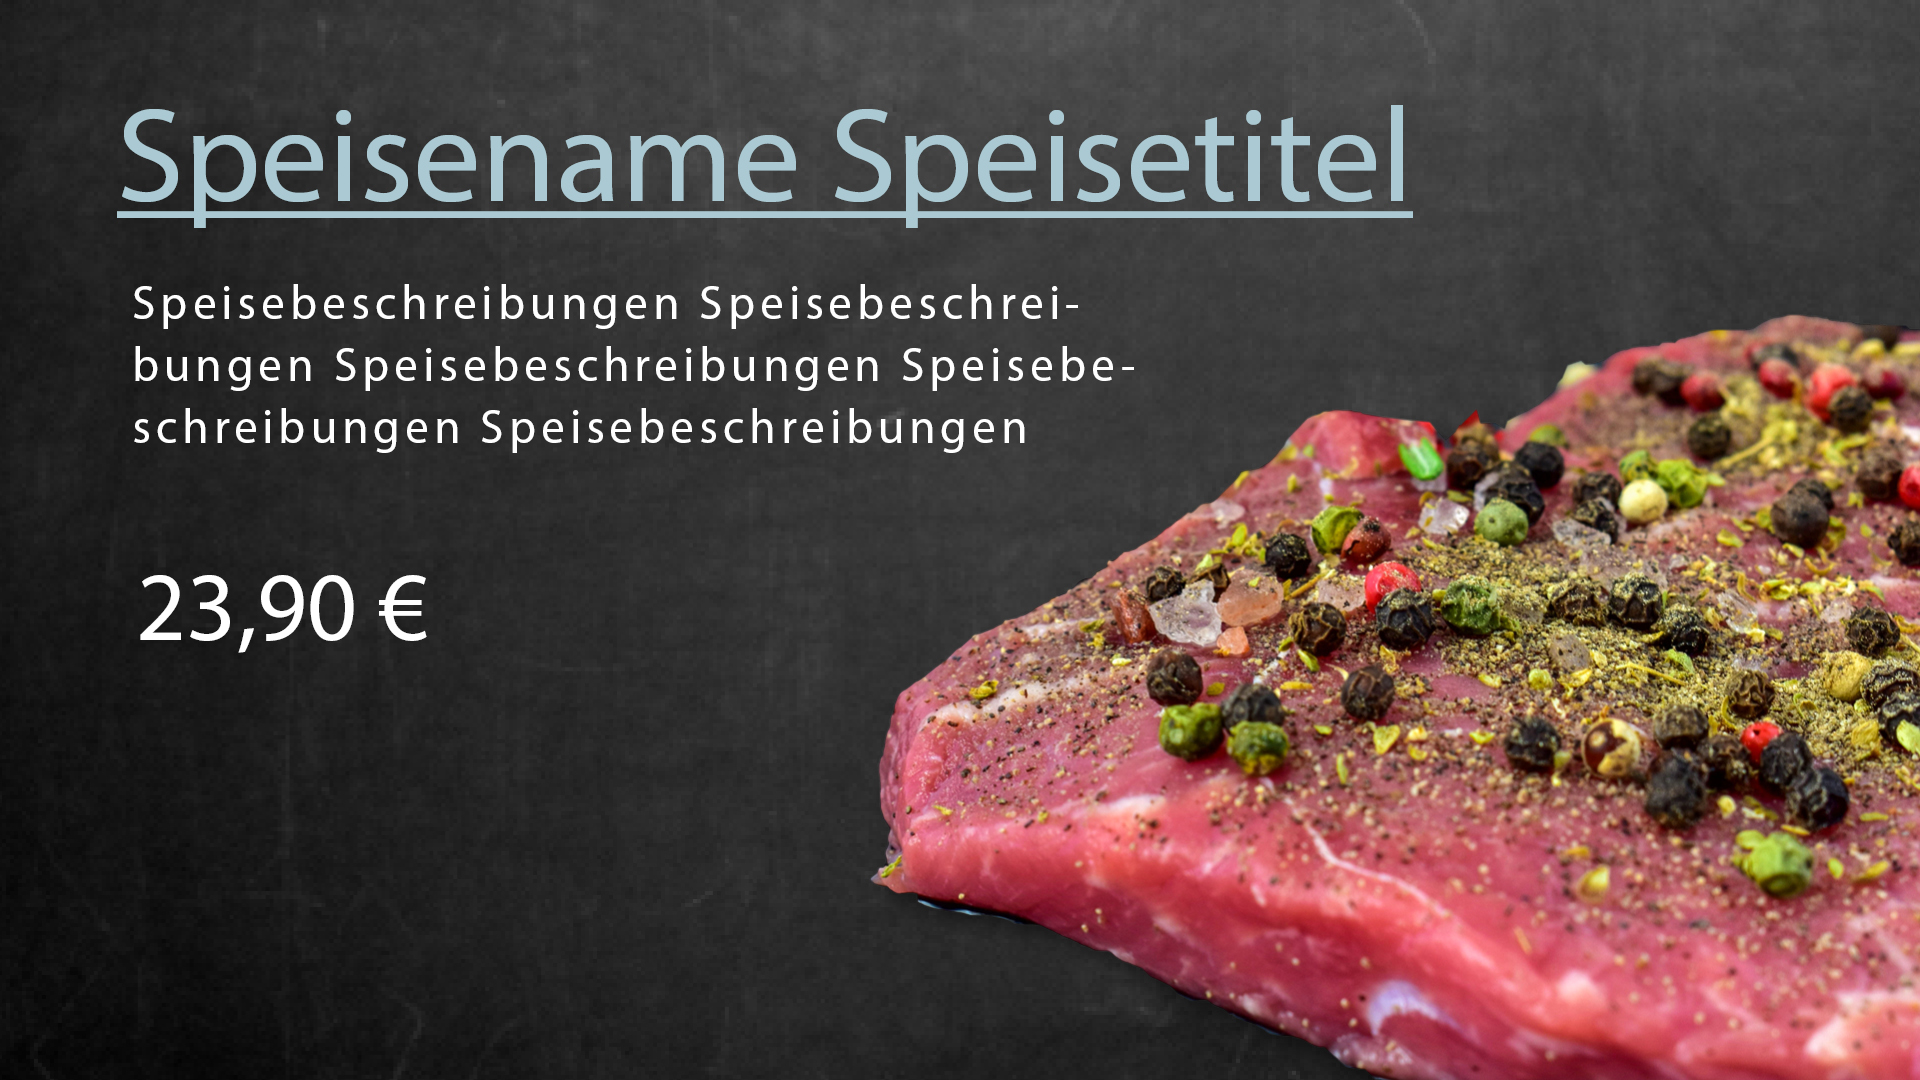 Digital-Signage-Metzgerei-Steak-Beef-digitale-Menueboard-Backshop-Fleischerei-DNZ-Networks10